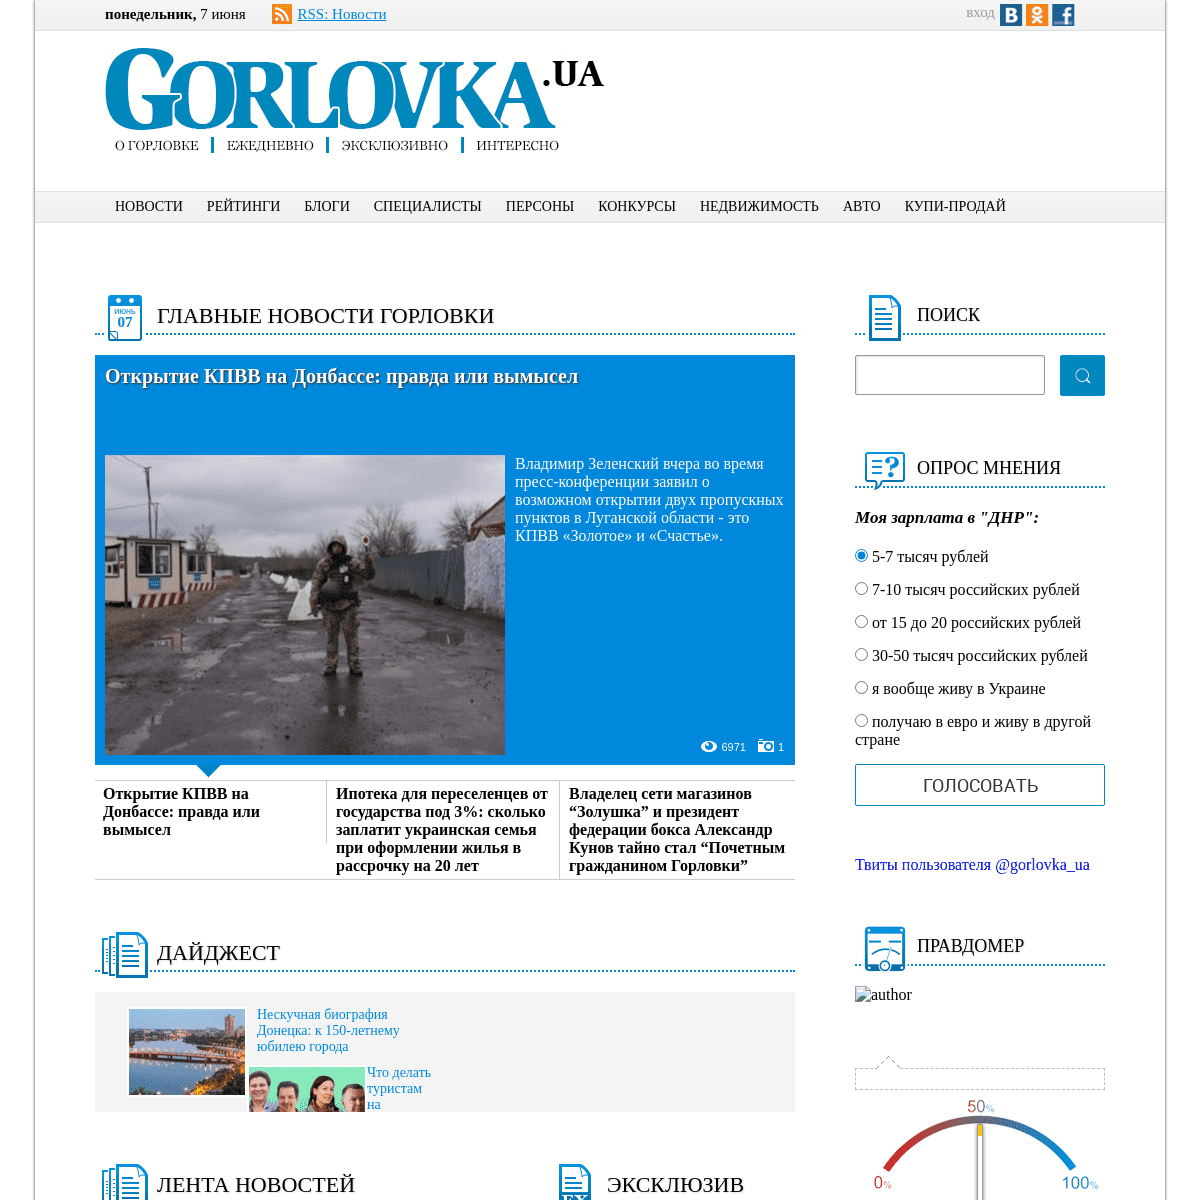 A complete backup of https://gorlovka.ua